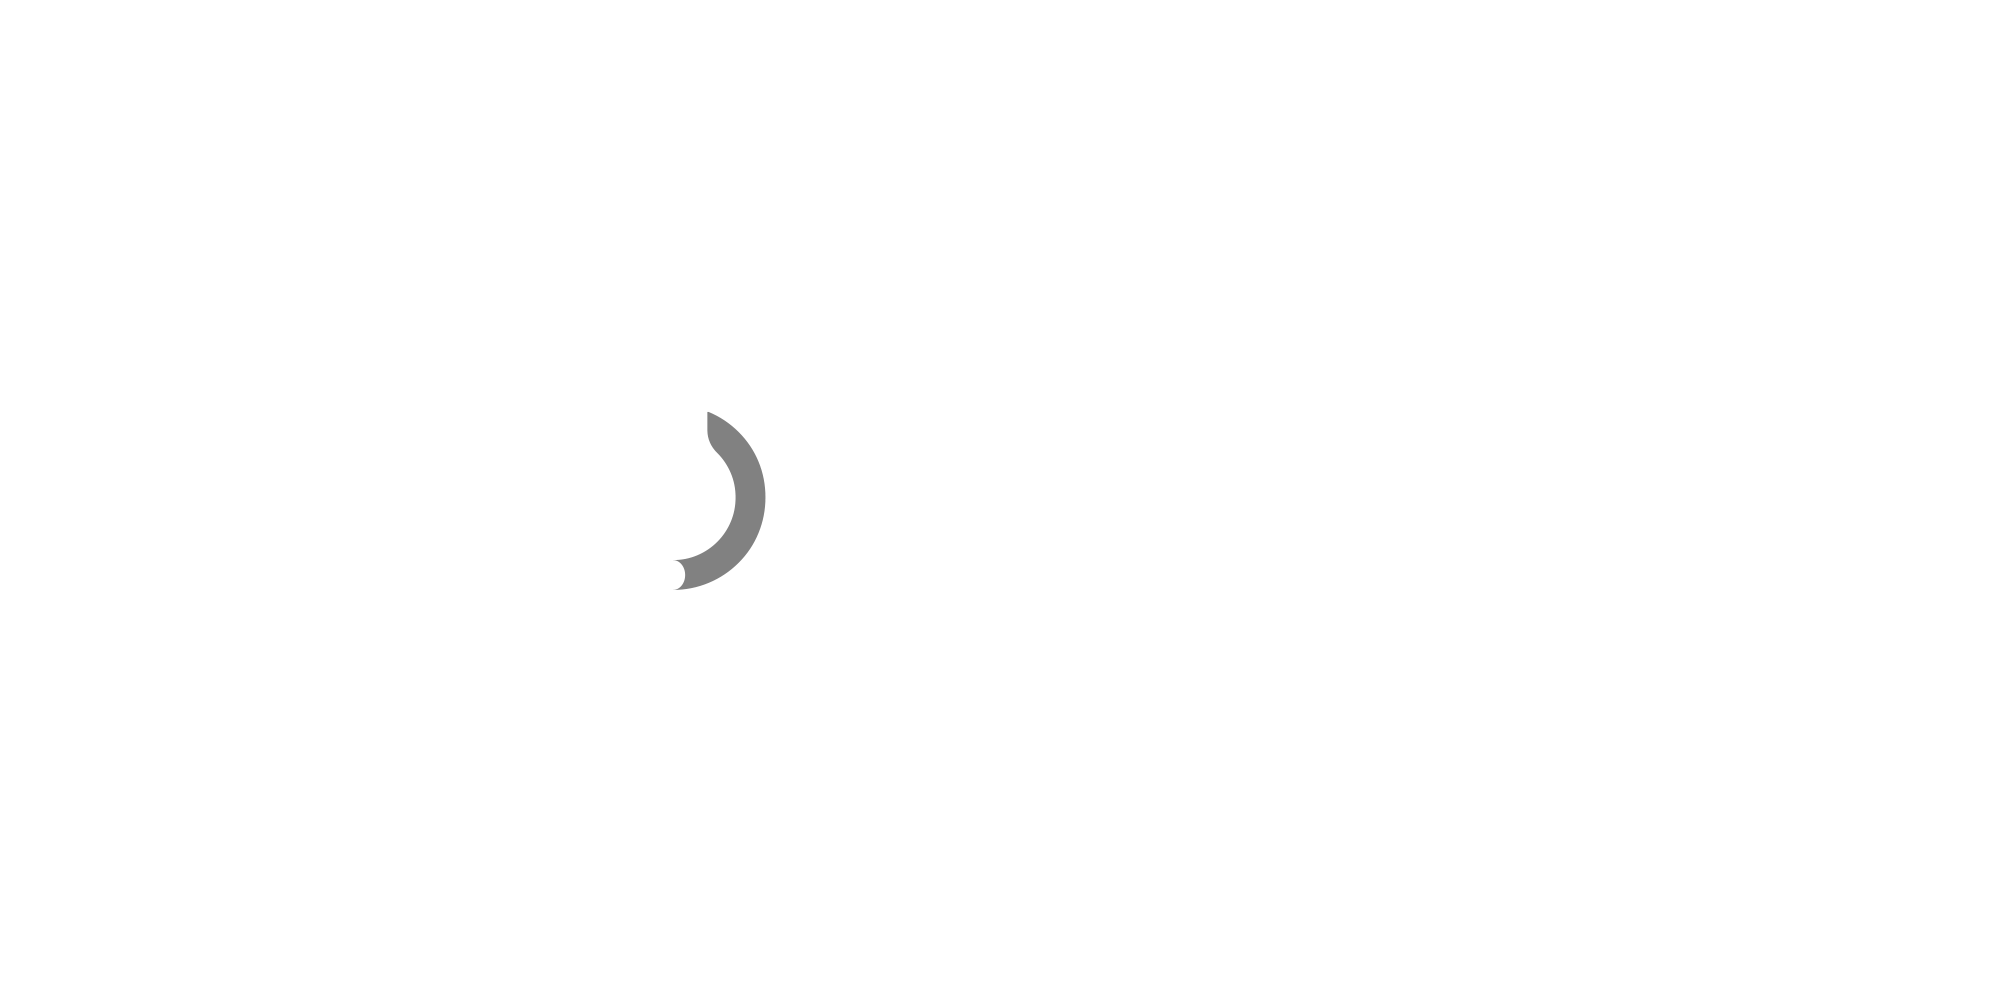 MOVSHOPBR